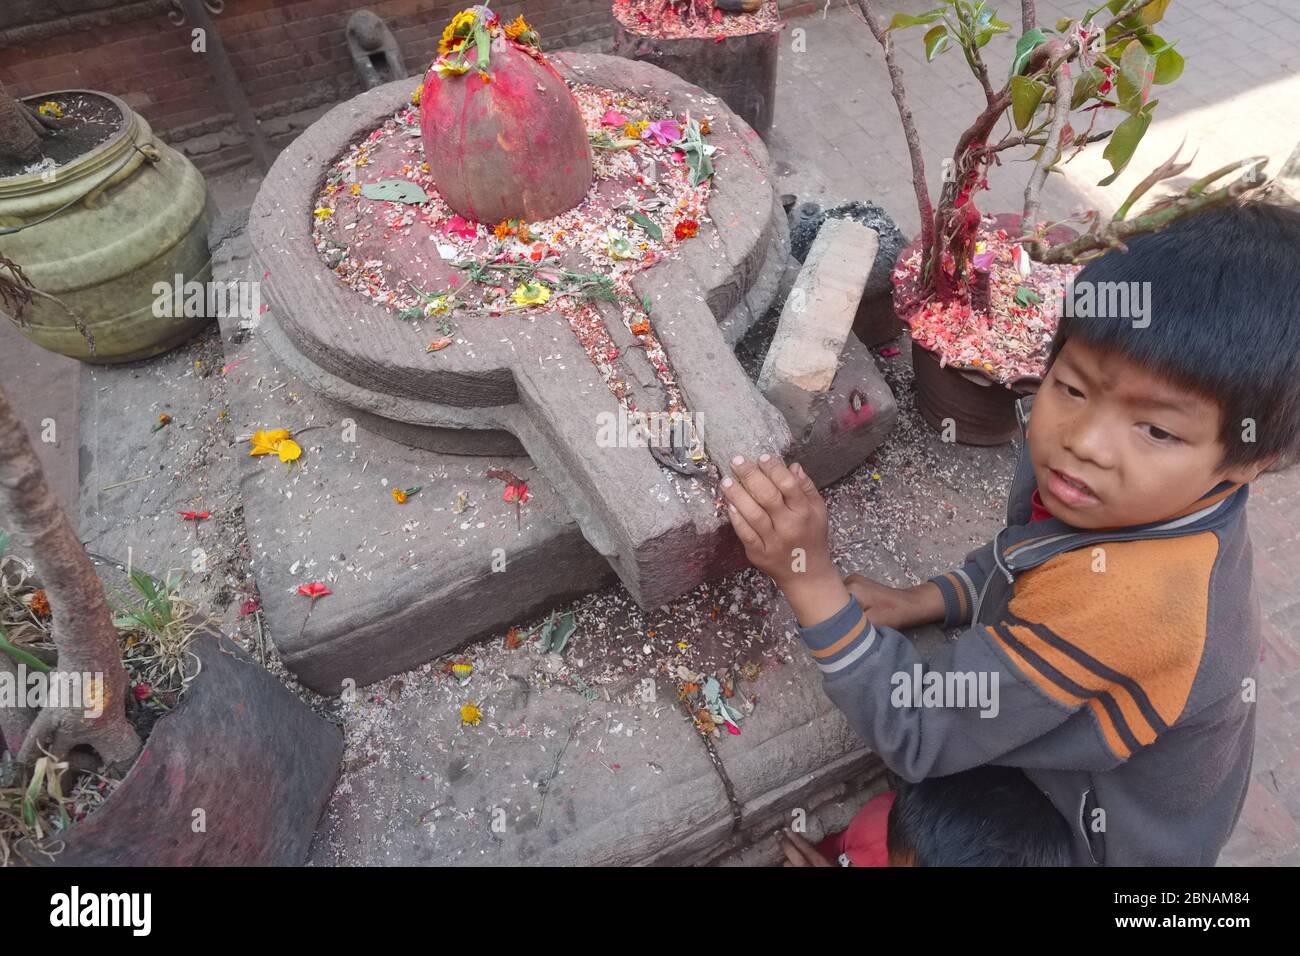 A Nepalese boy poses next to a Lingam inside a Yoni, symbols for Hindu god Shiva & goddess Shakti respectively; Bhaktapur, Kathmandu Valley, Nepal Stock Photo